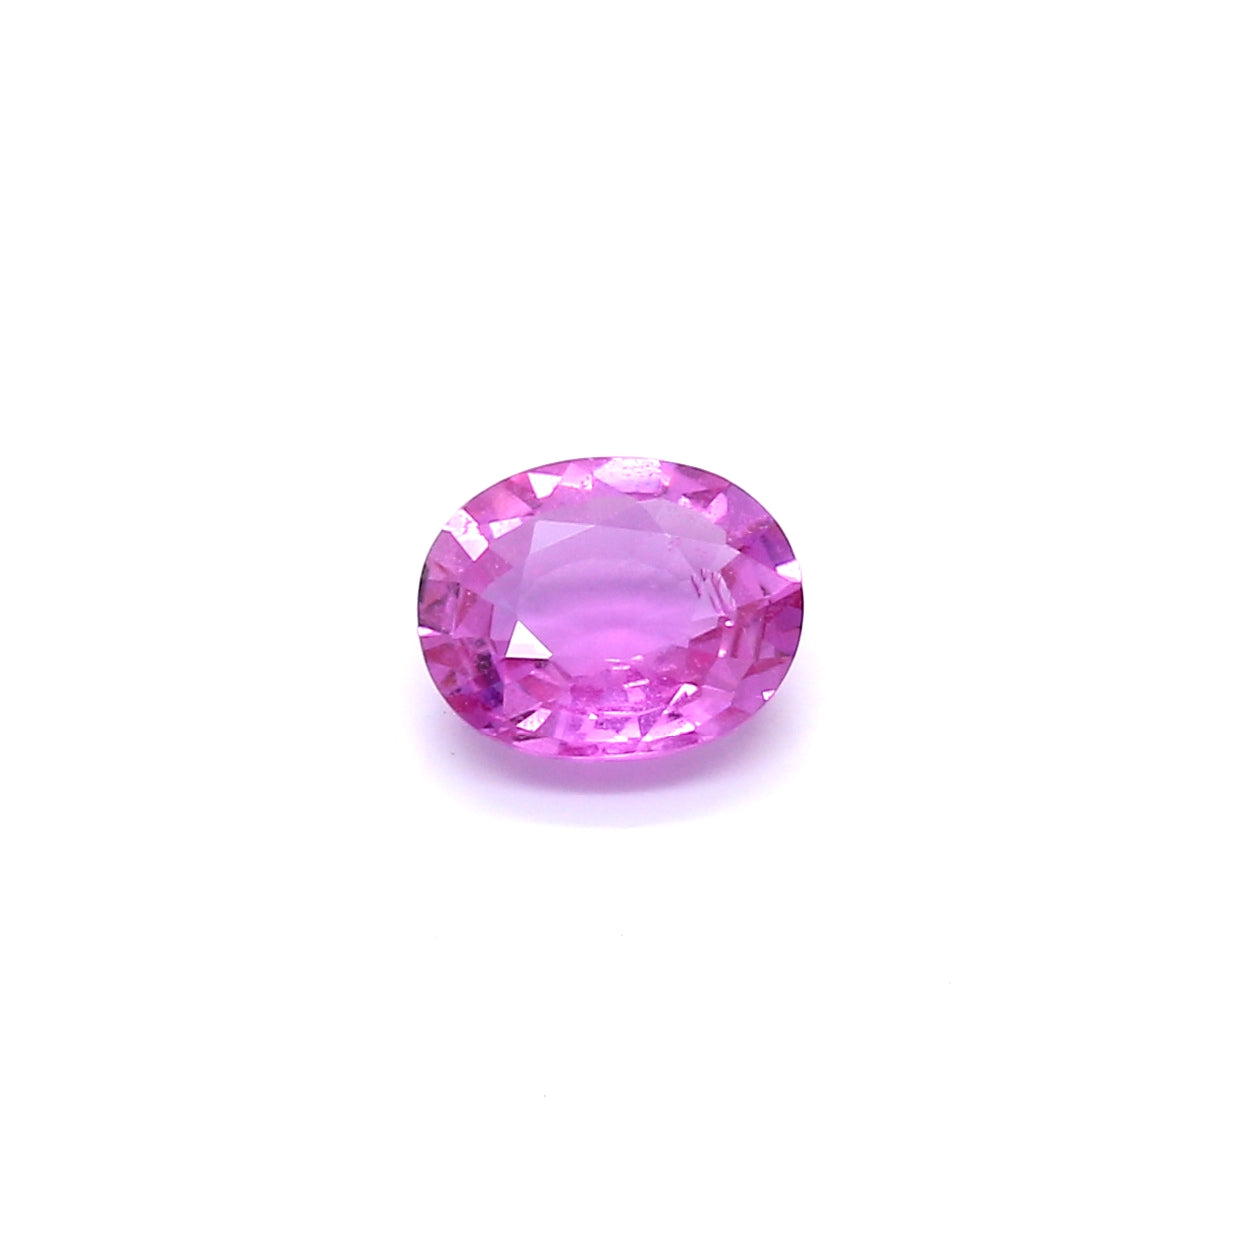 1.01ct Pink, Oval Sapphire, Heated, Madagascar - 6.73 x 5.71 x 2.89mm